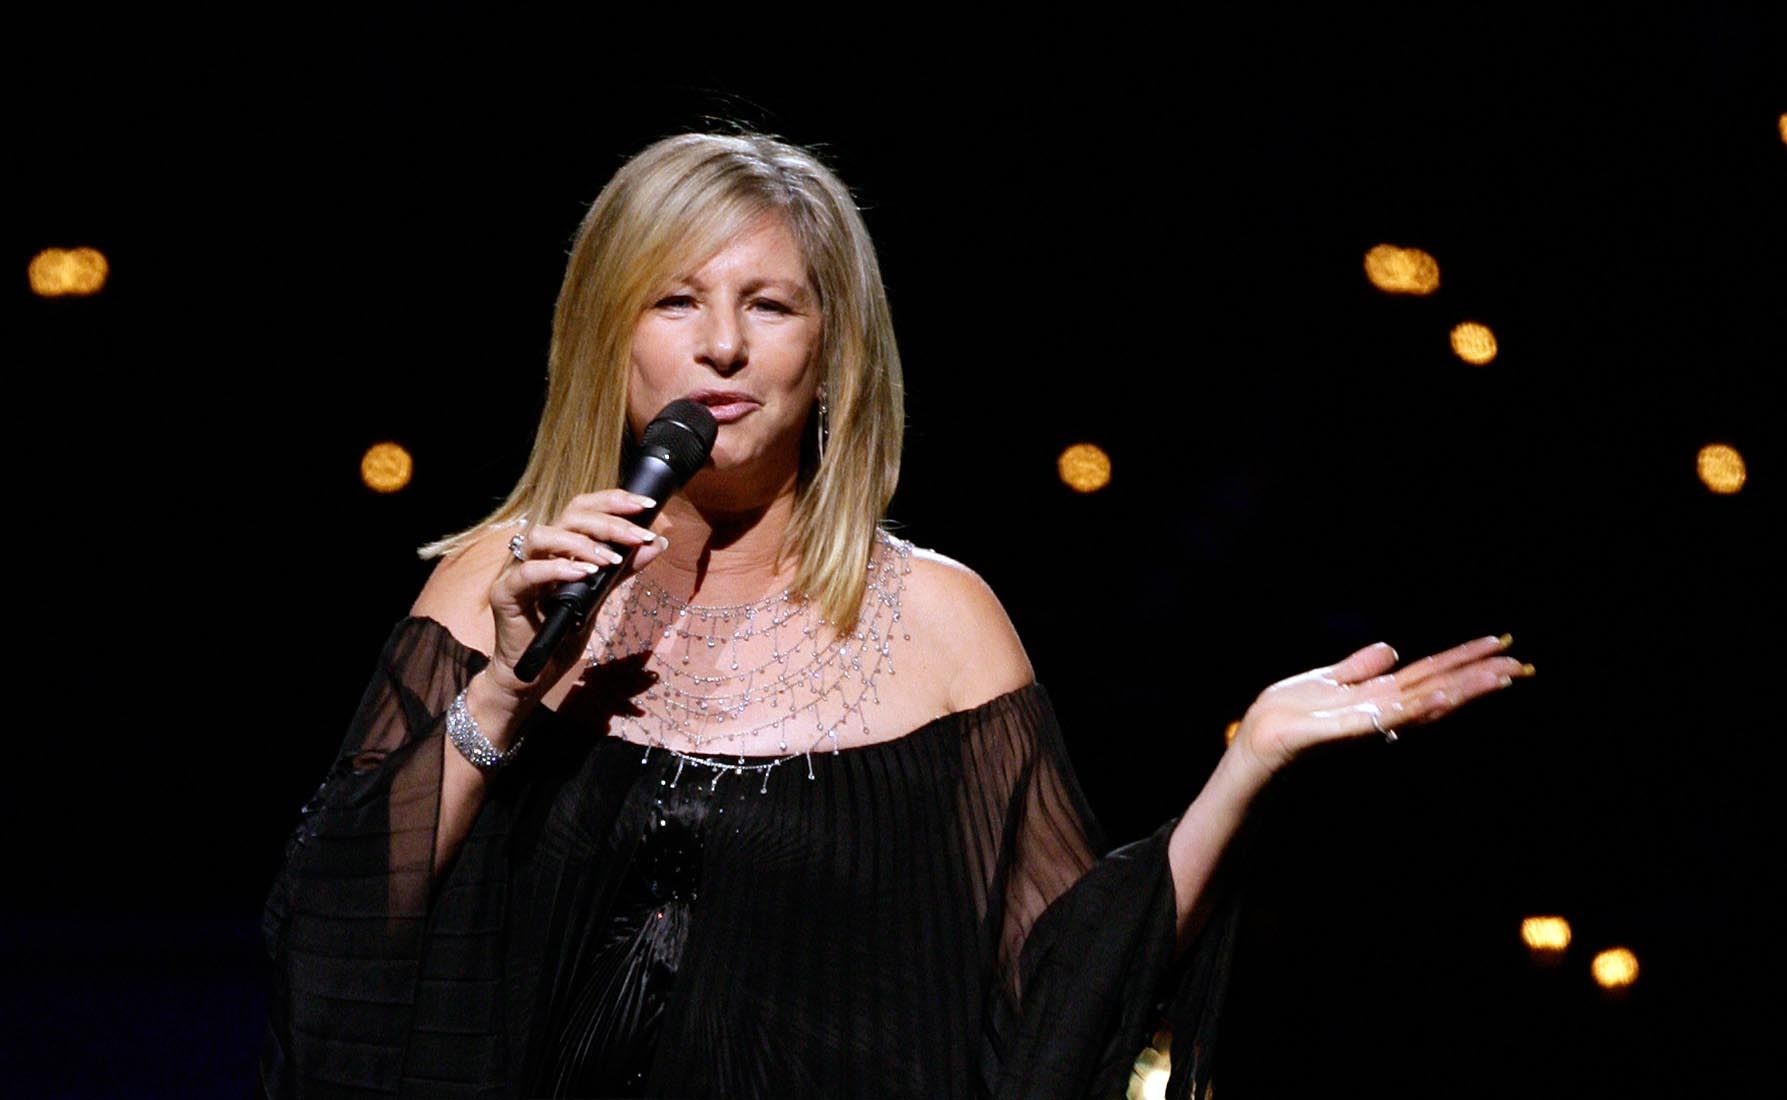 Barbra Streisand, whose album The Broadway Album featured lyrics written by Sondheim, praised his ‘wonderful’ music and lyrics (Yui Mok/PA)